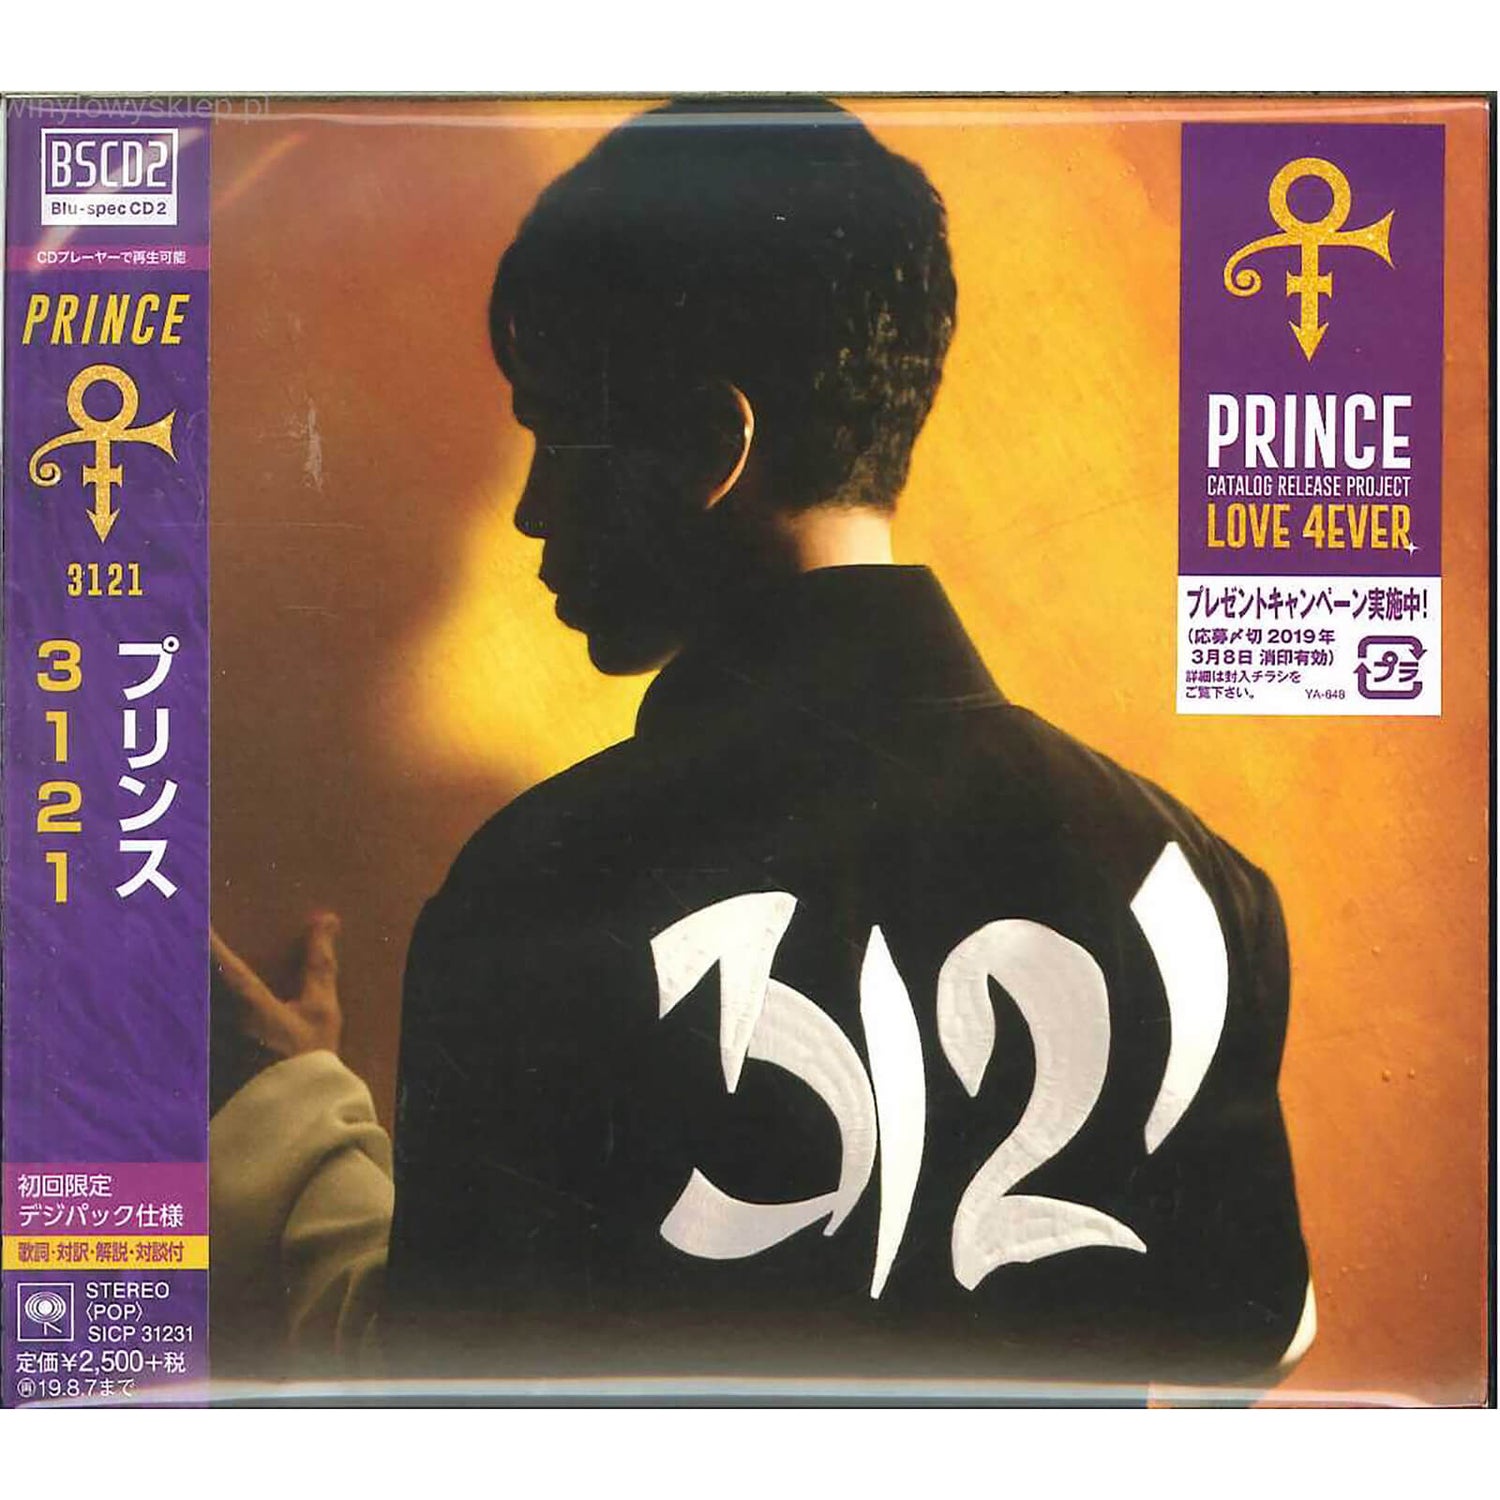 Prince - 3121 Vinyl Japanese Edition